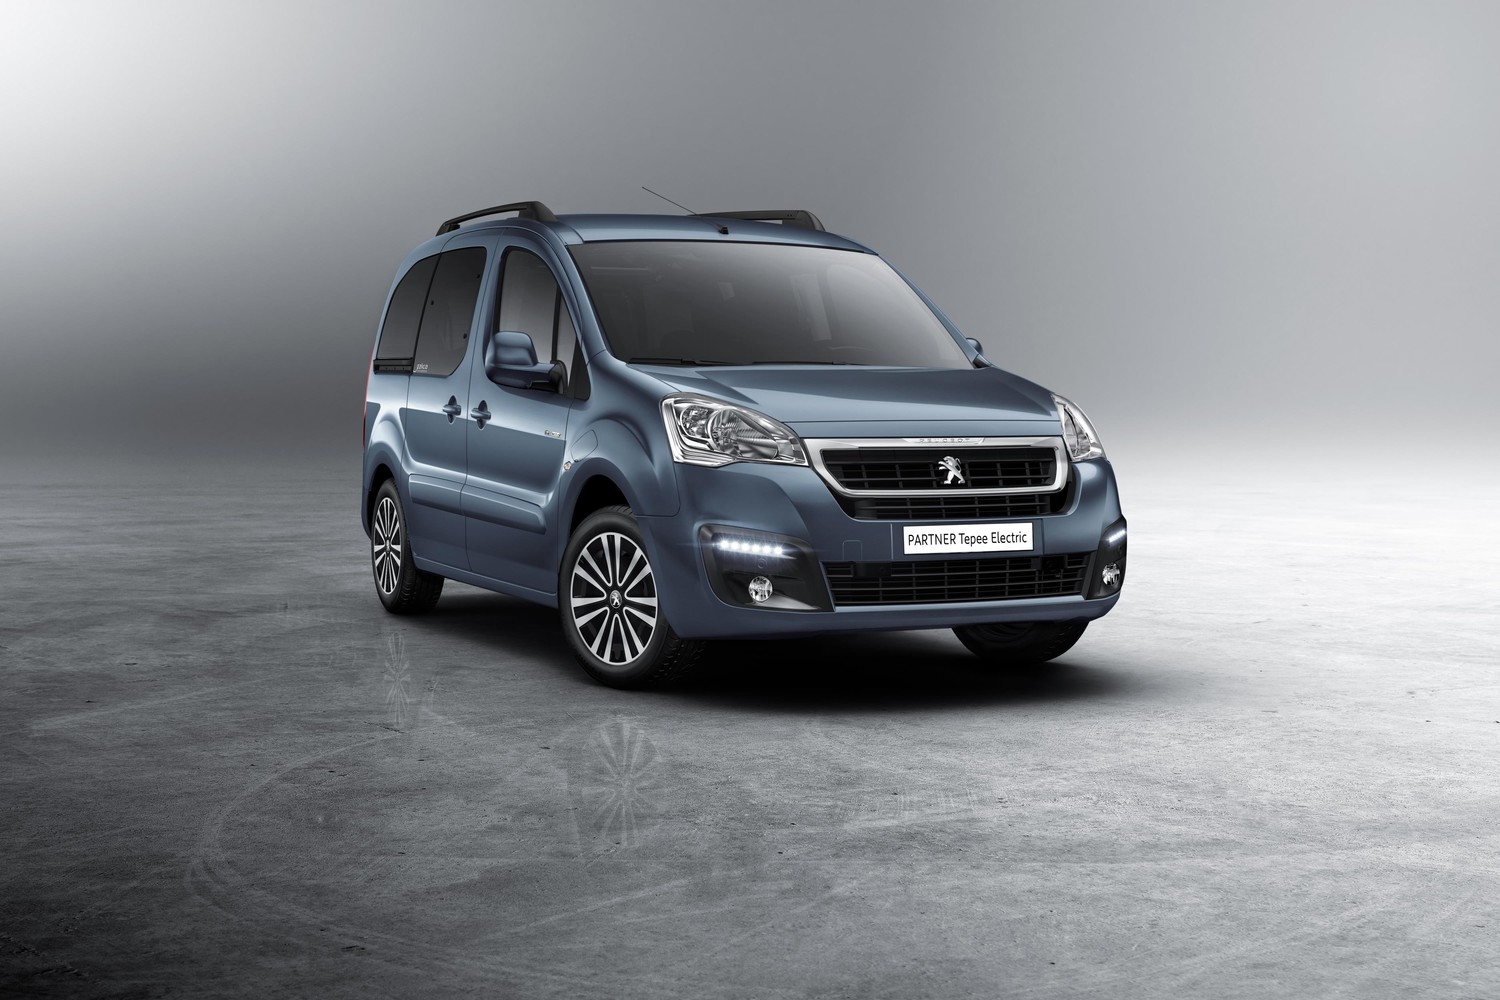 Im September kommt das Elektroauto Peugeot Partner Tepee Electric auf den Markt. Bildquelle: Peugeot